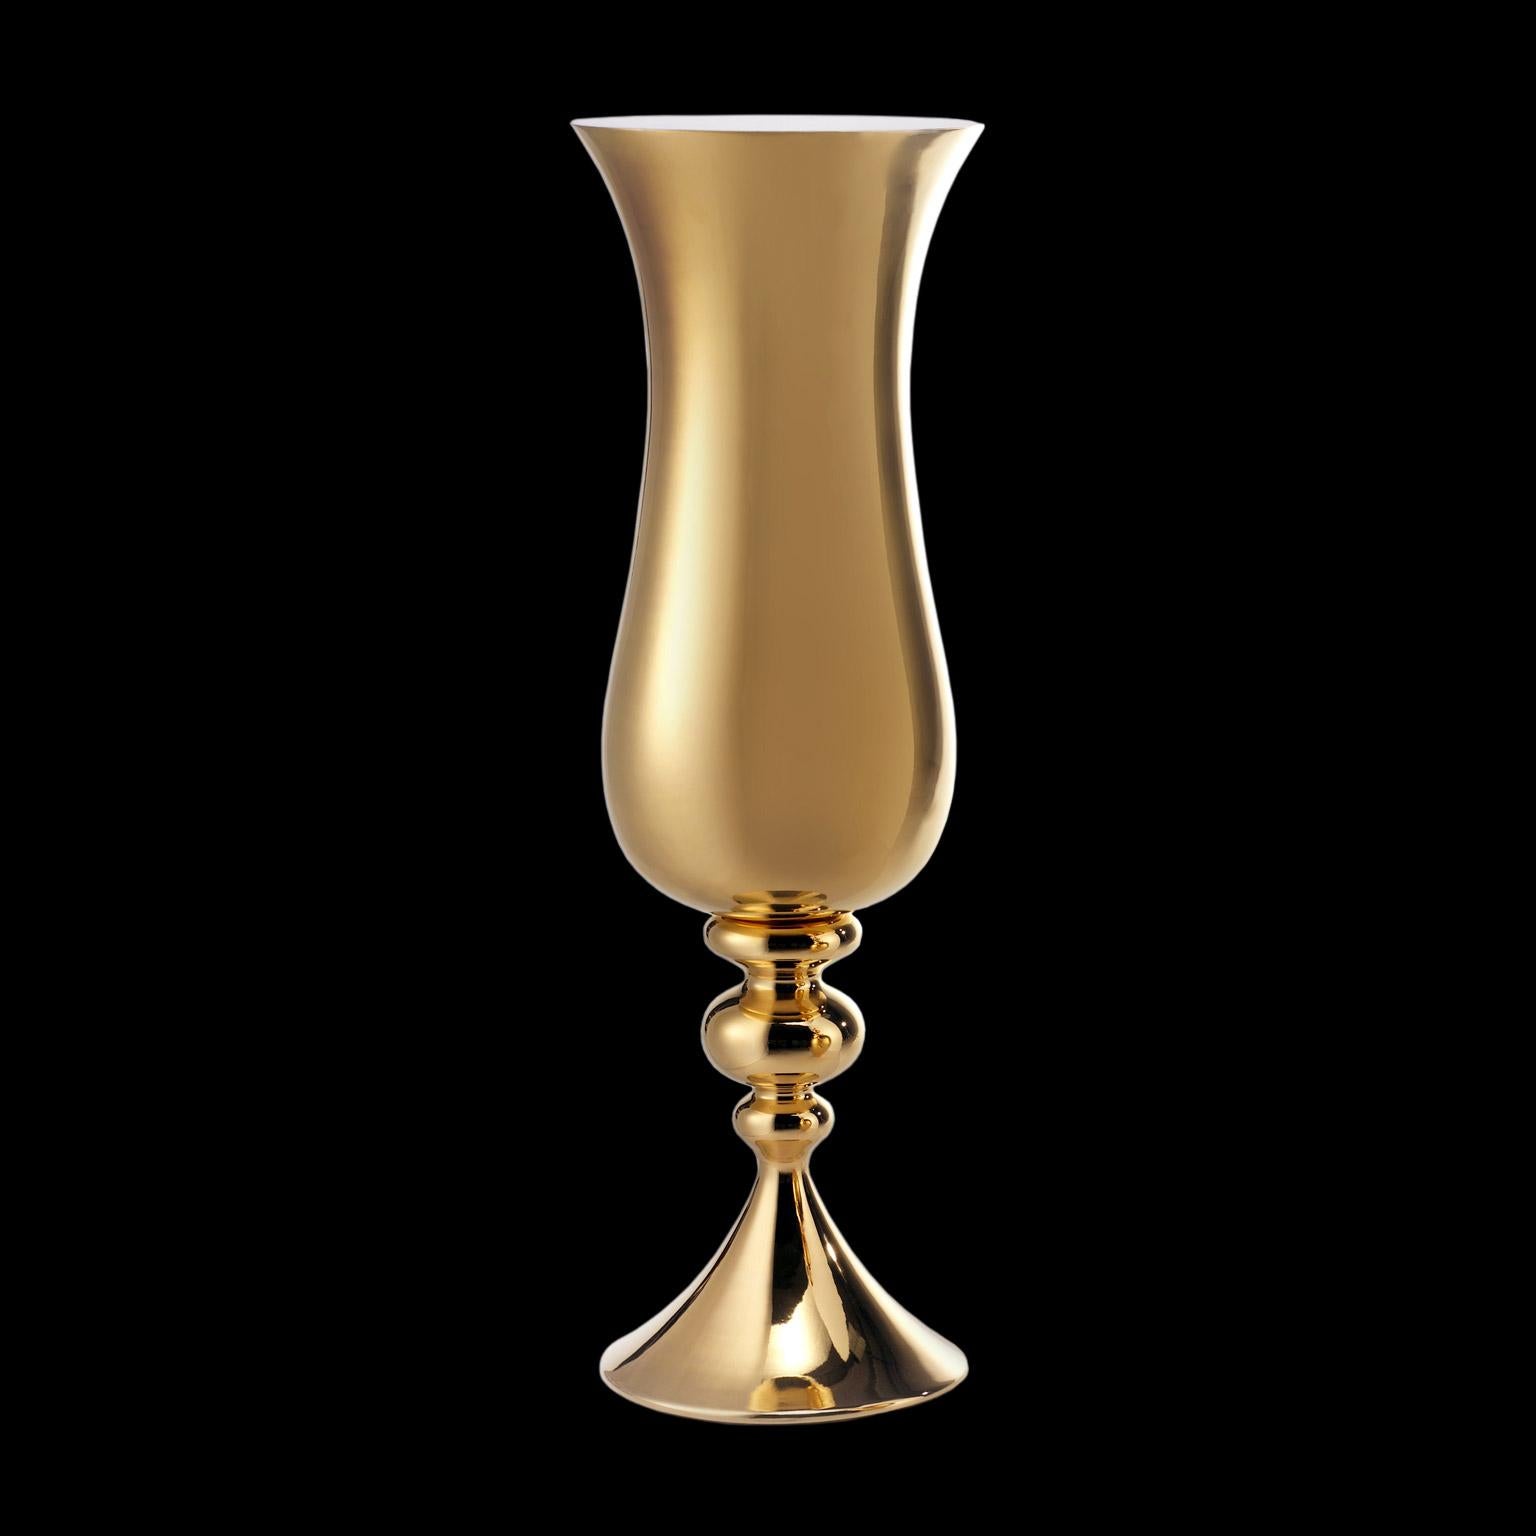 Ceramic vase LOTH
cod. CP050 
handcrafted in 24-karat gold
and white glazed inside  

measures: 
H. 140.0 cm.
Dm. 40.0 cm.